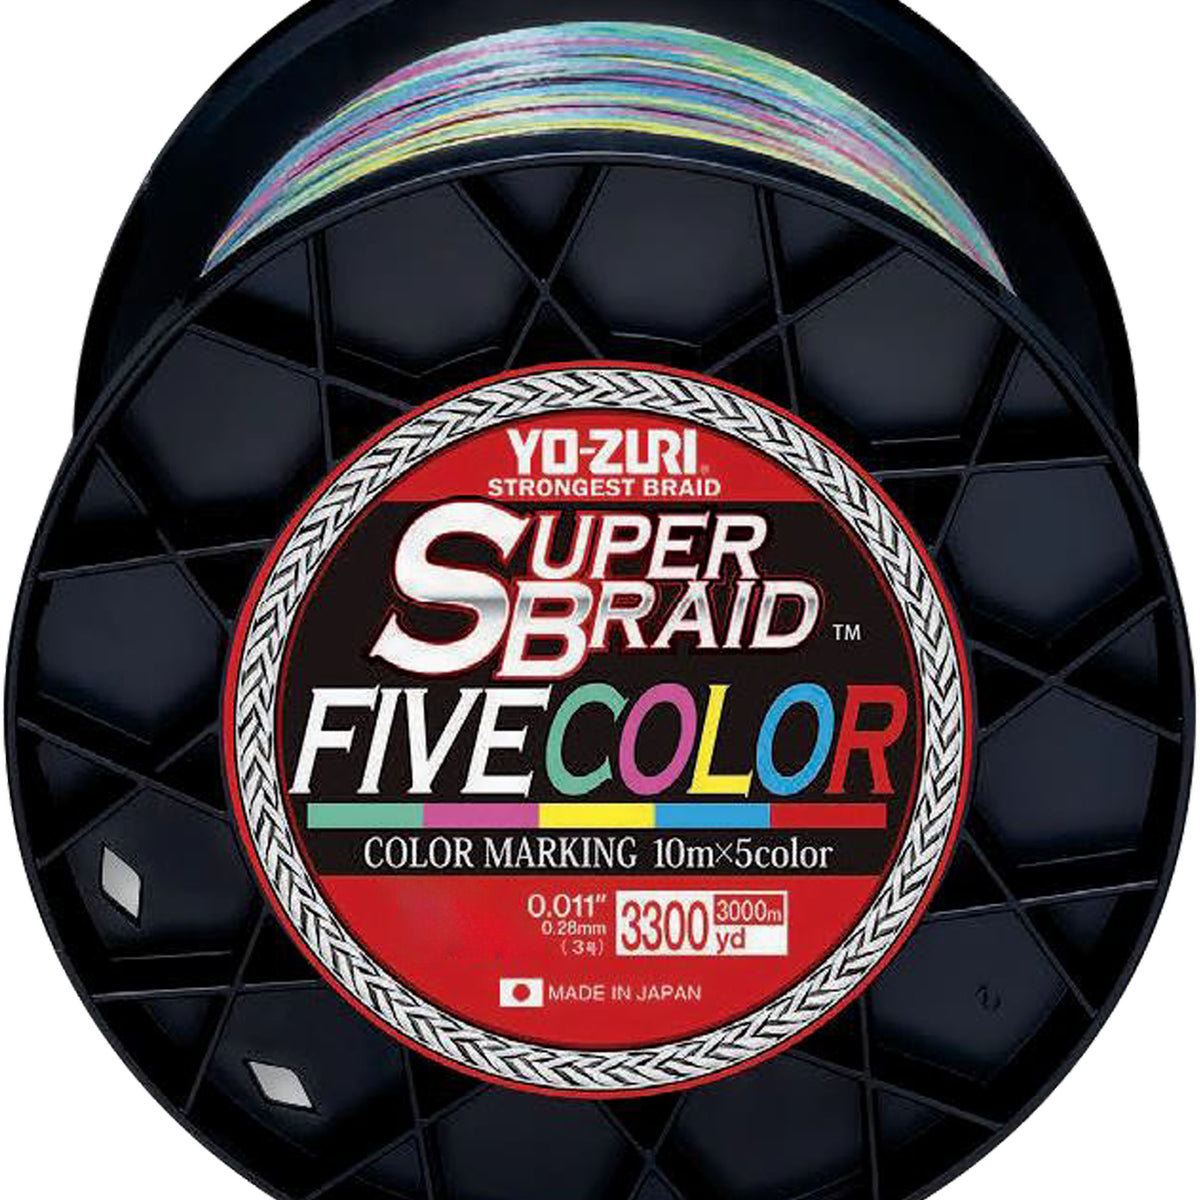 Yo-Zuri Super Braid Five Color - 3300 Yards